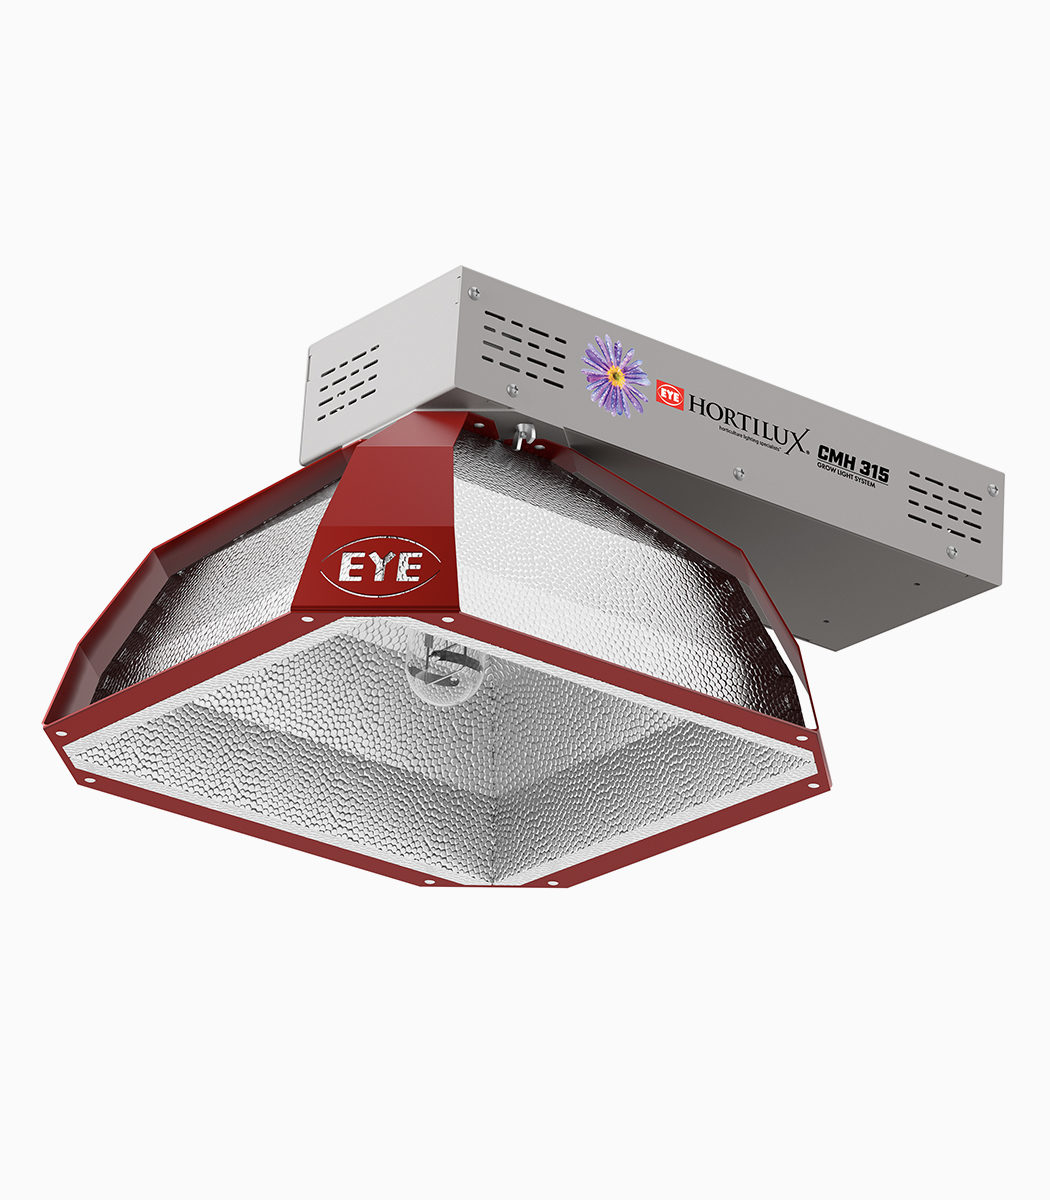 Eye Hortilux CMH 315 Grow Light System